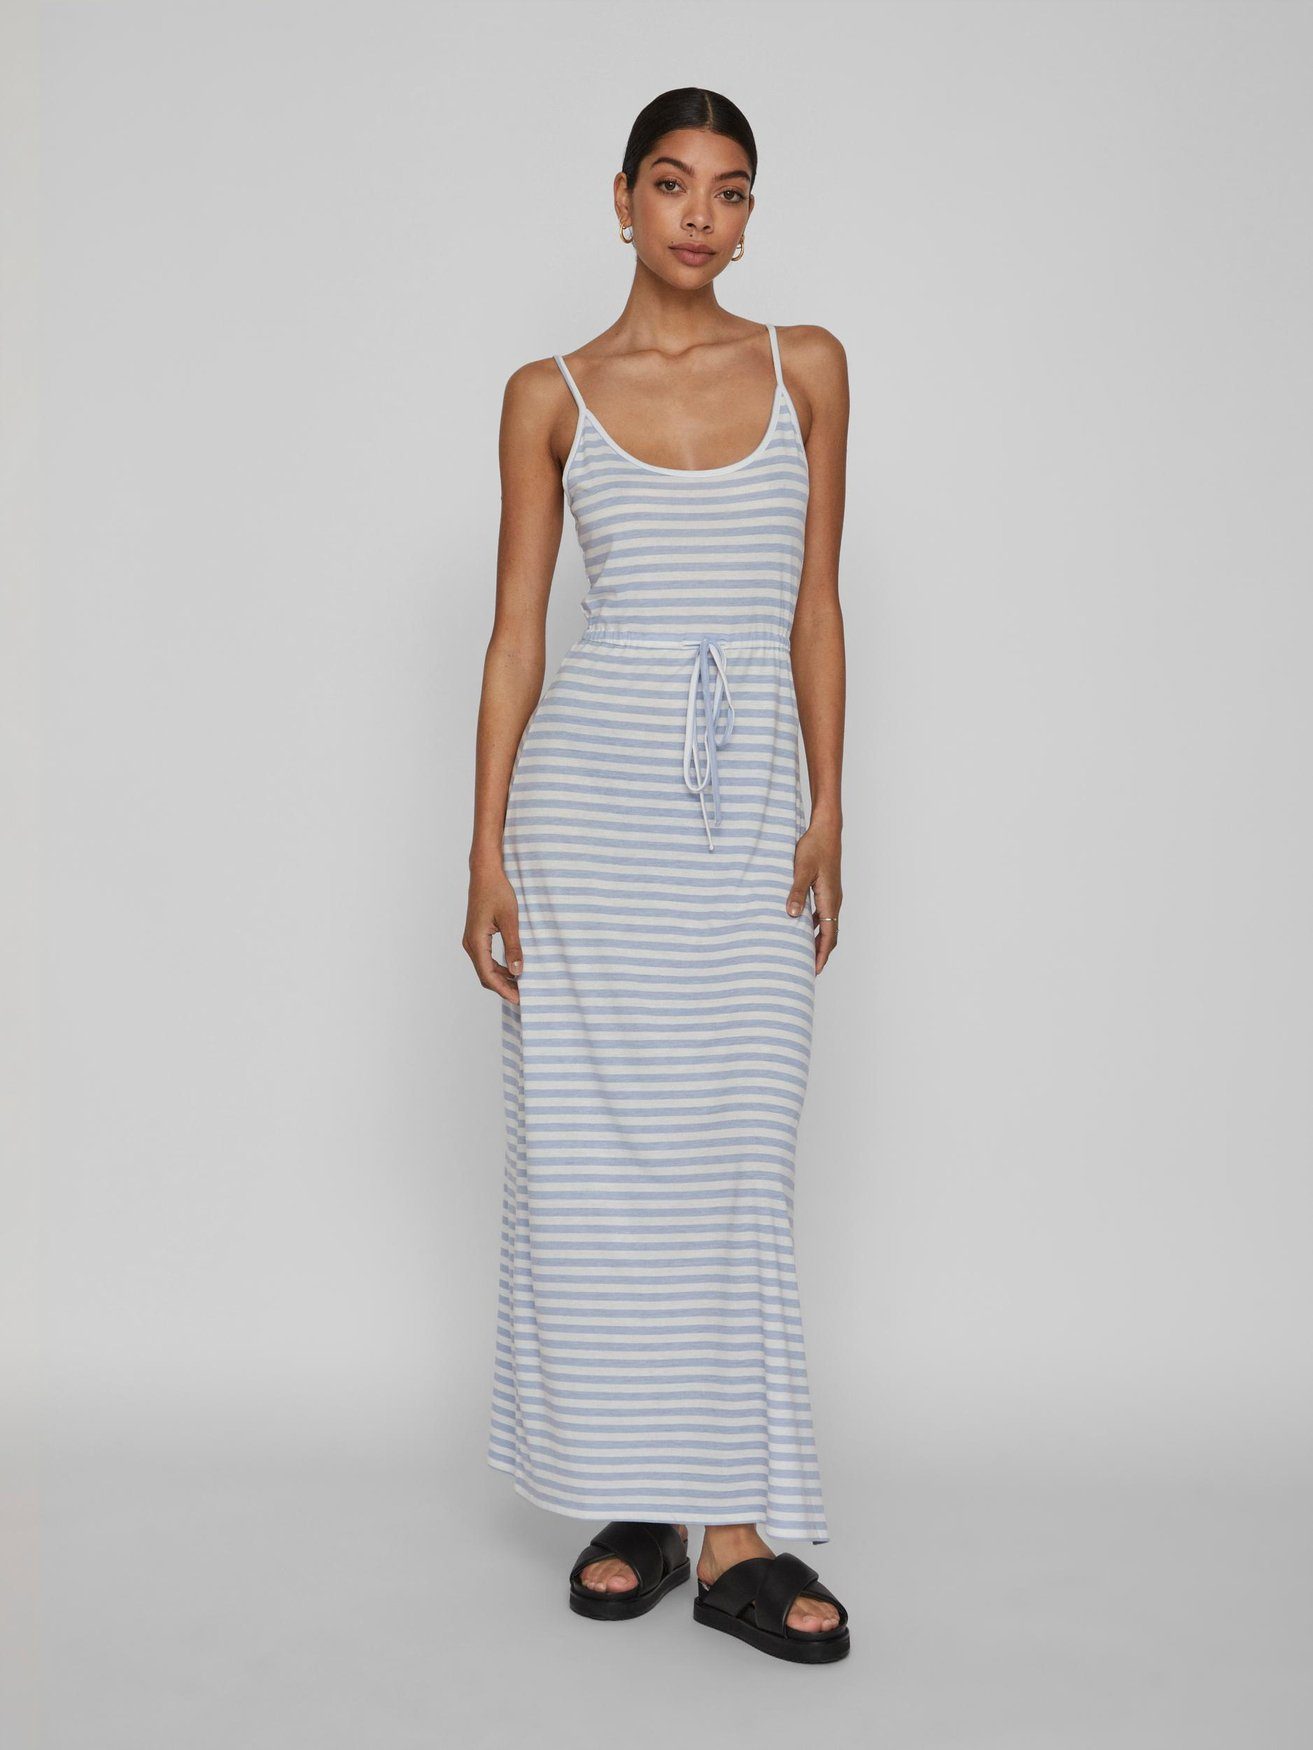 Shirtkleid Kleid Dress mit Jersey Vila VIMOONEY in Tunnelzug (lang) Maxi Blau 5733